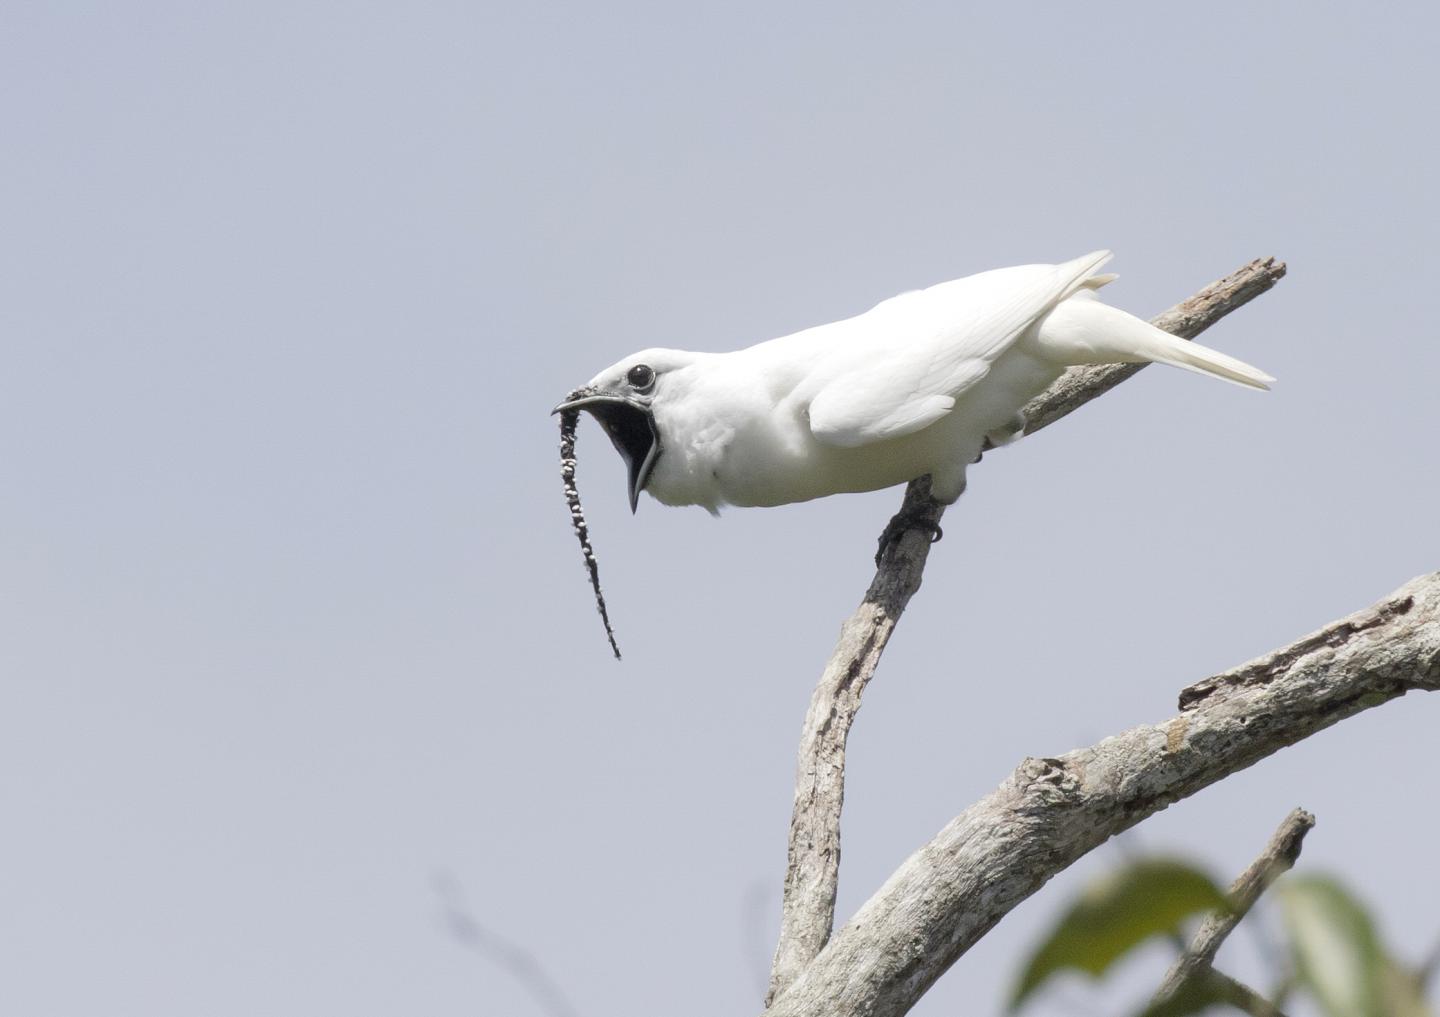 A Male White Bellbird